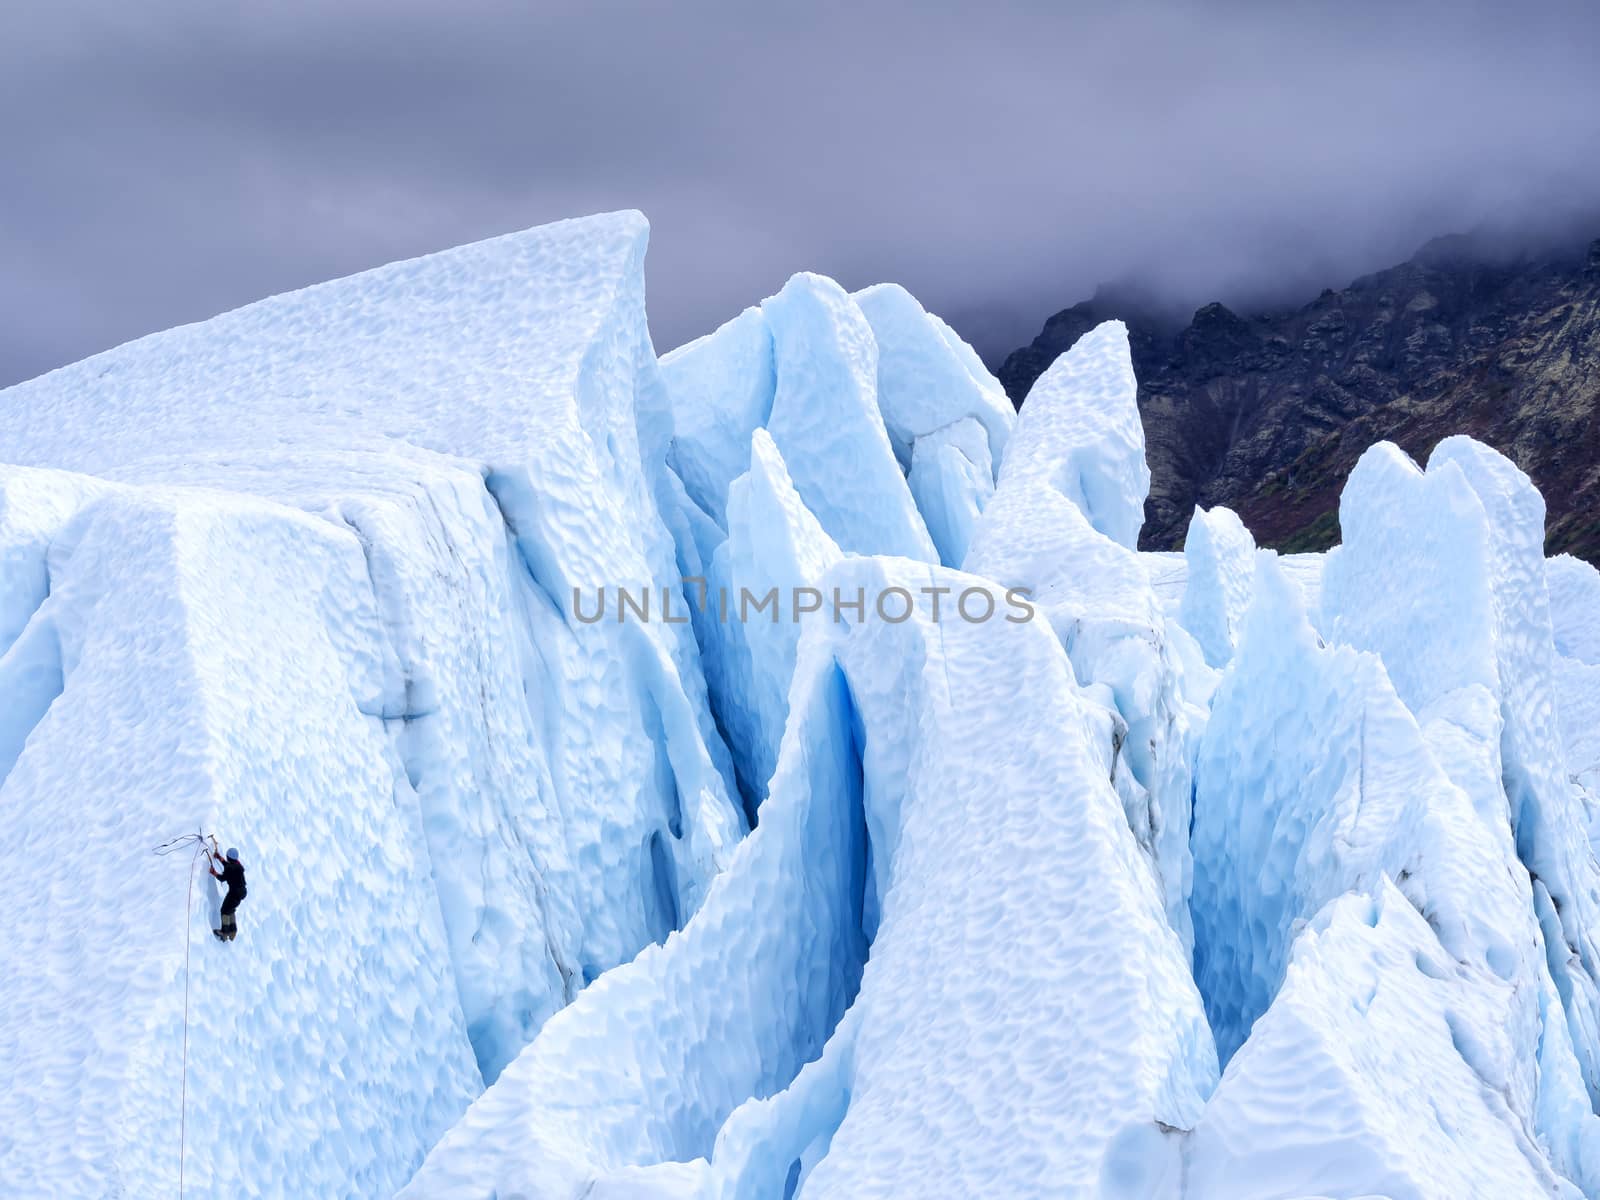 Glacier Climbing - Remote Alaska by leieng